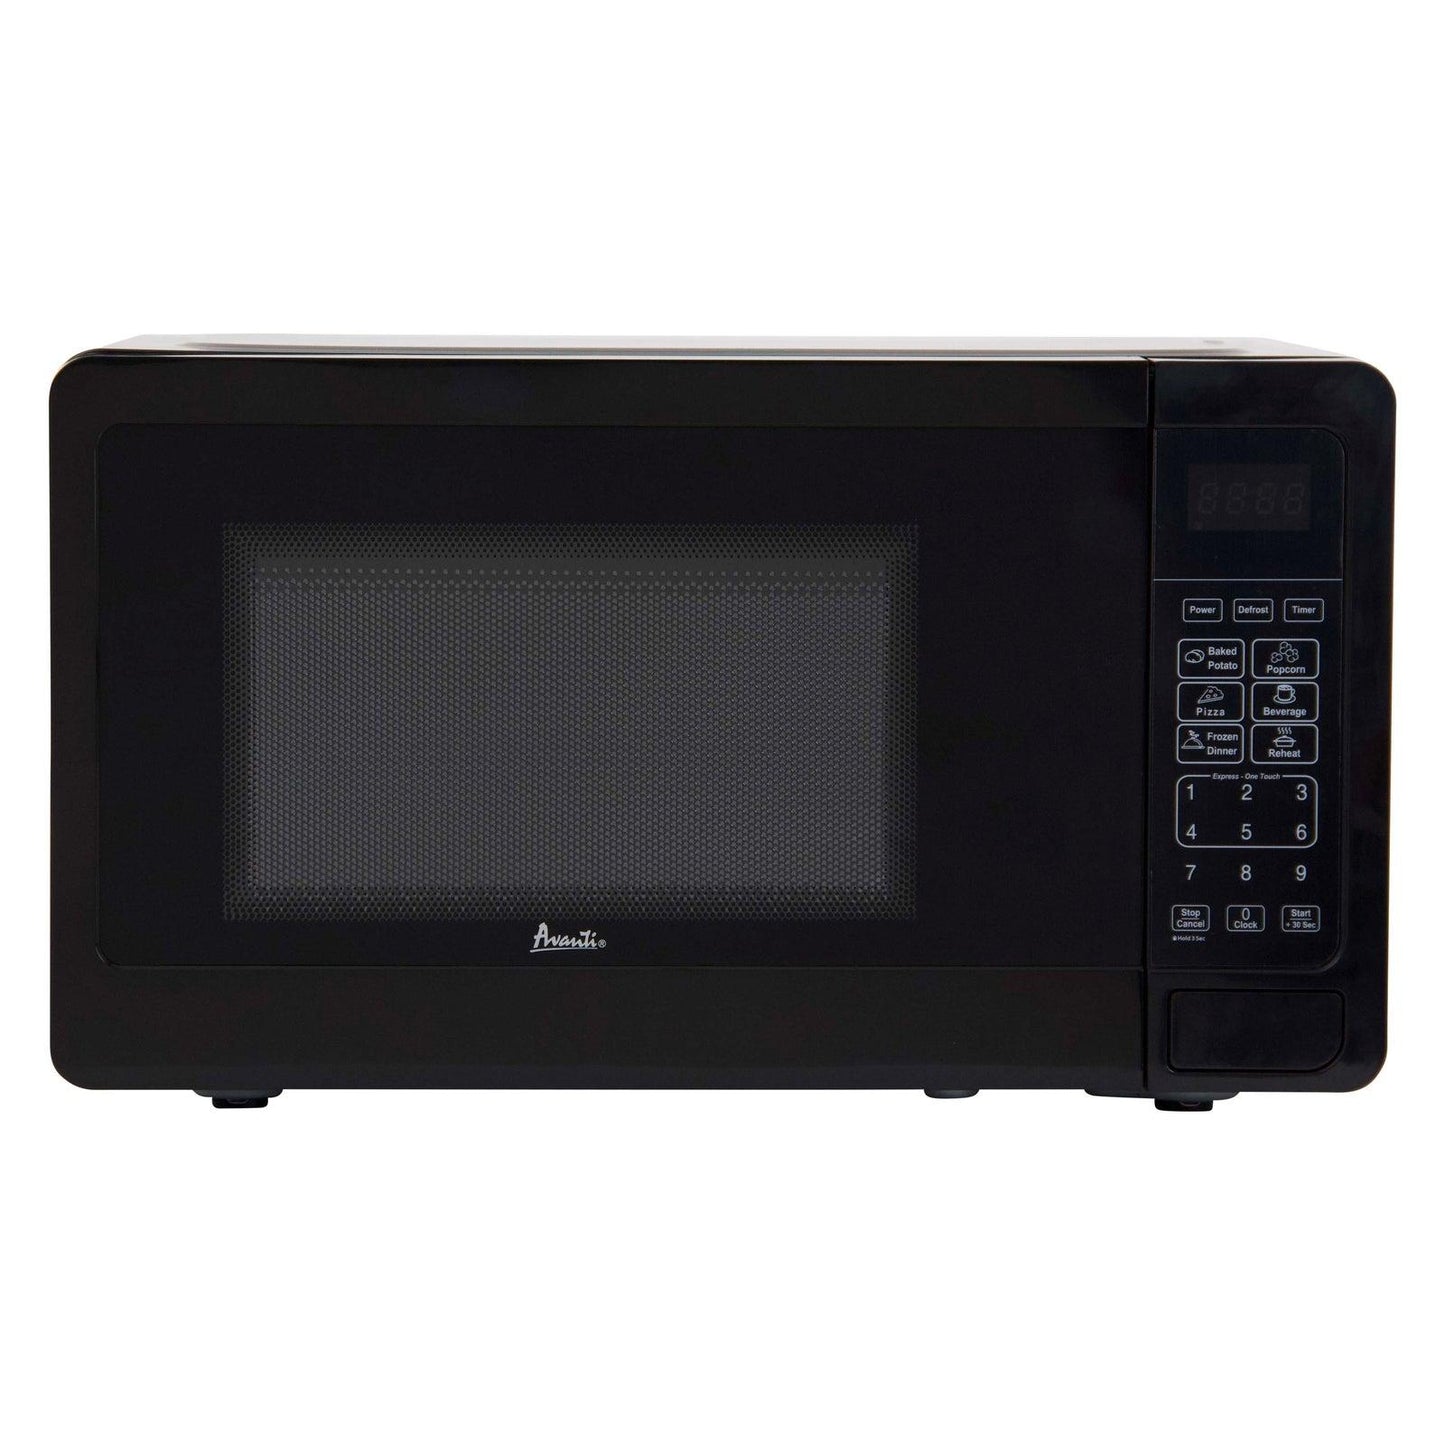 Avanti MT7V1B 0.7 Cu. Ft. Microwave Oven